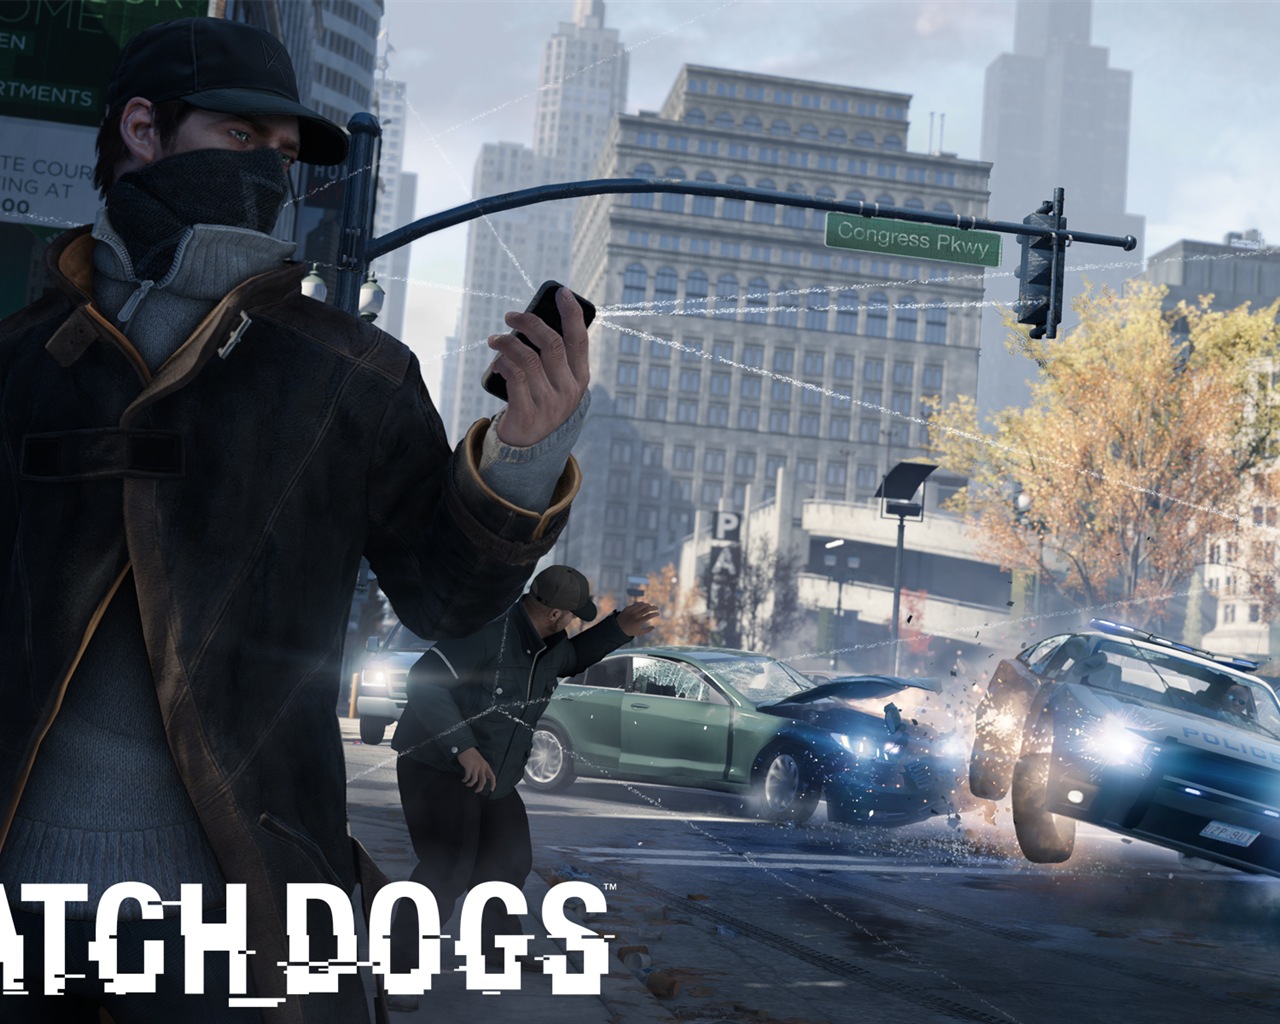 Watch Dogs 2013 HD herní plochu #4 - 1280x1024